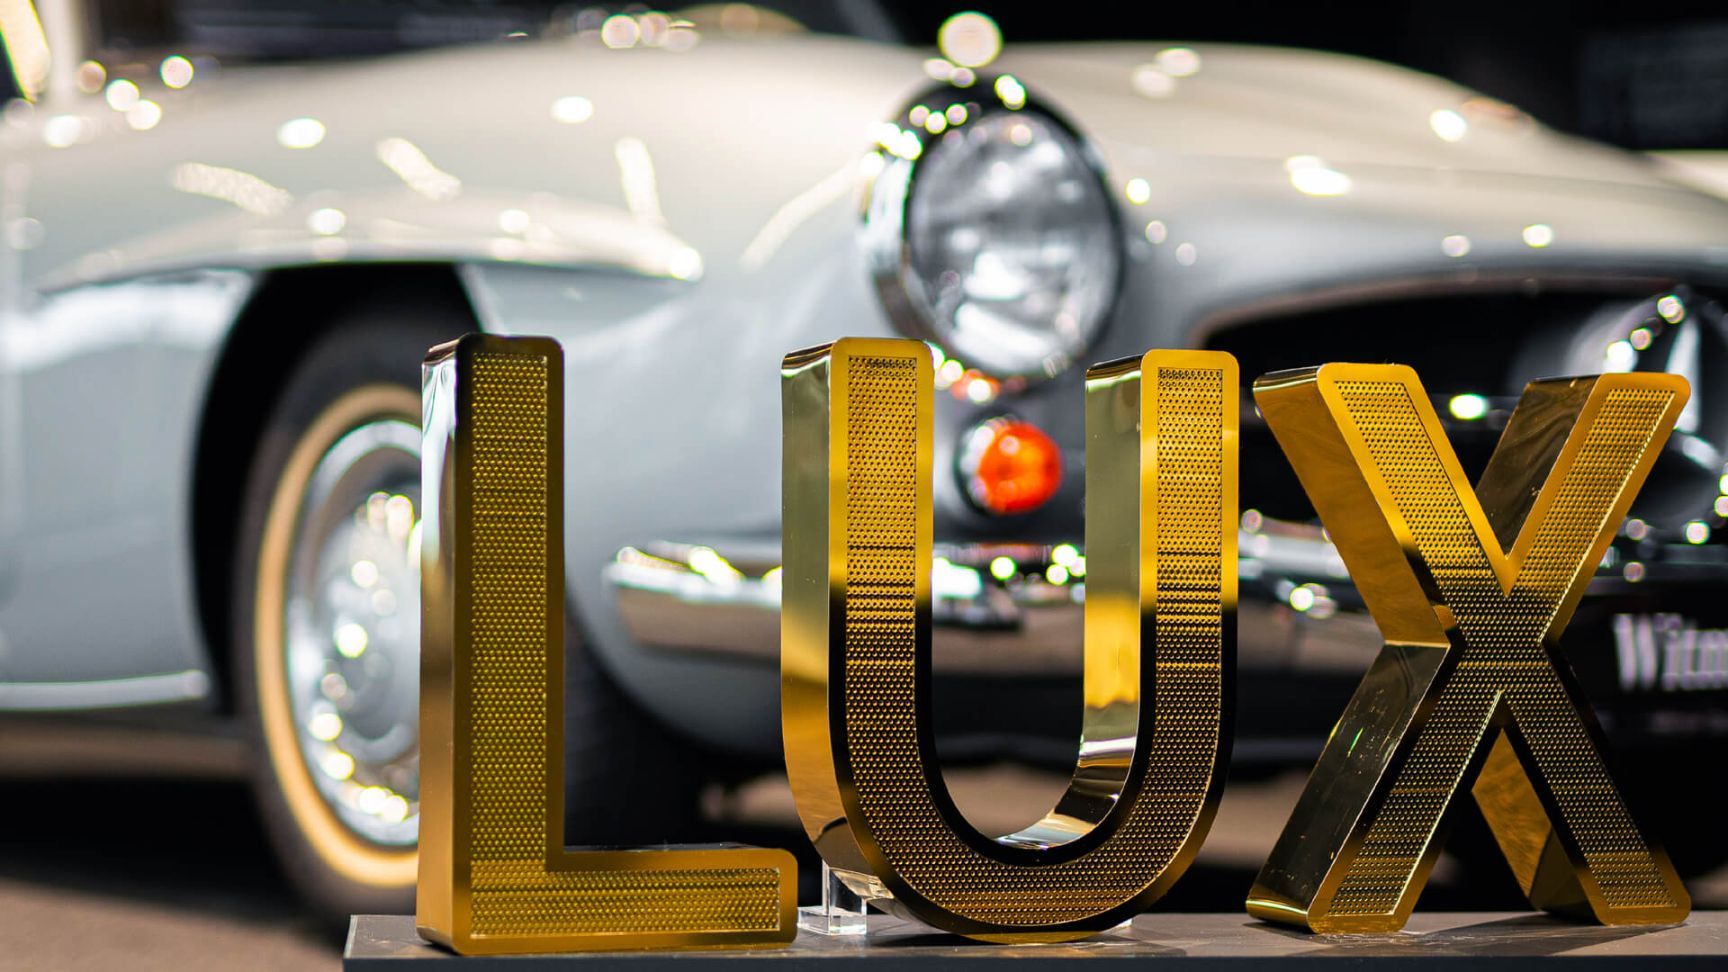 Lettres en acier inoxydable perforé LUX - Lettres LUX en acier inoxydable perforé et brillant, dans le showroom Mercedes